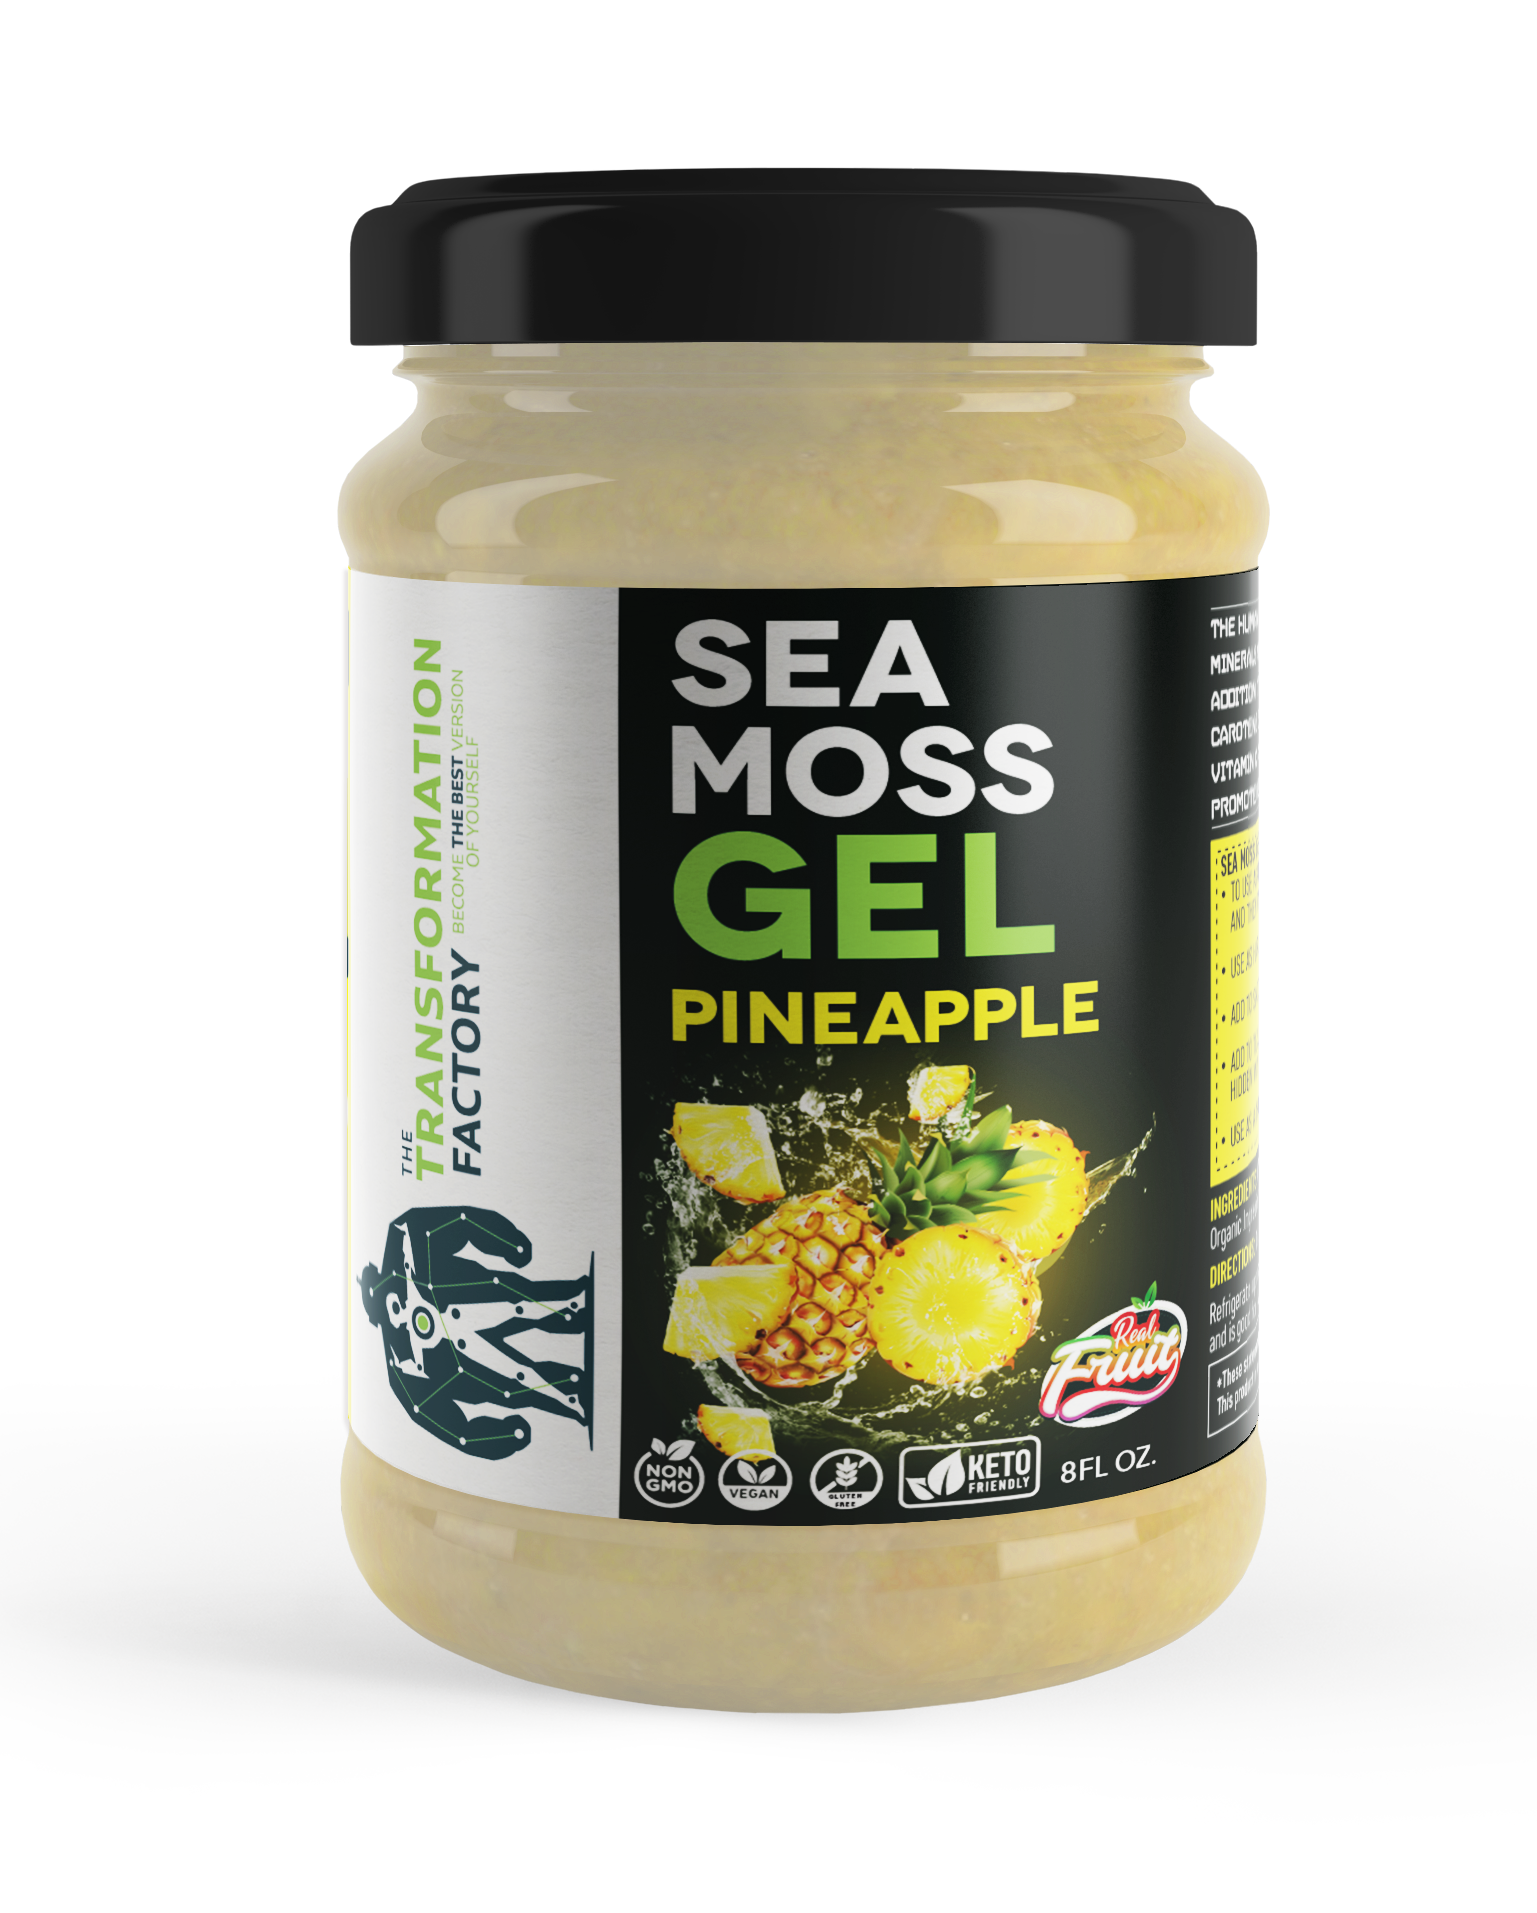 A jar of pineapple sea moss gel